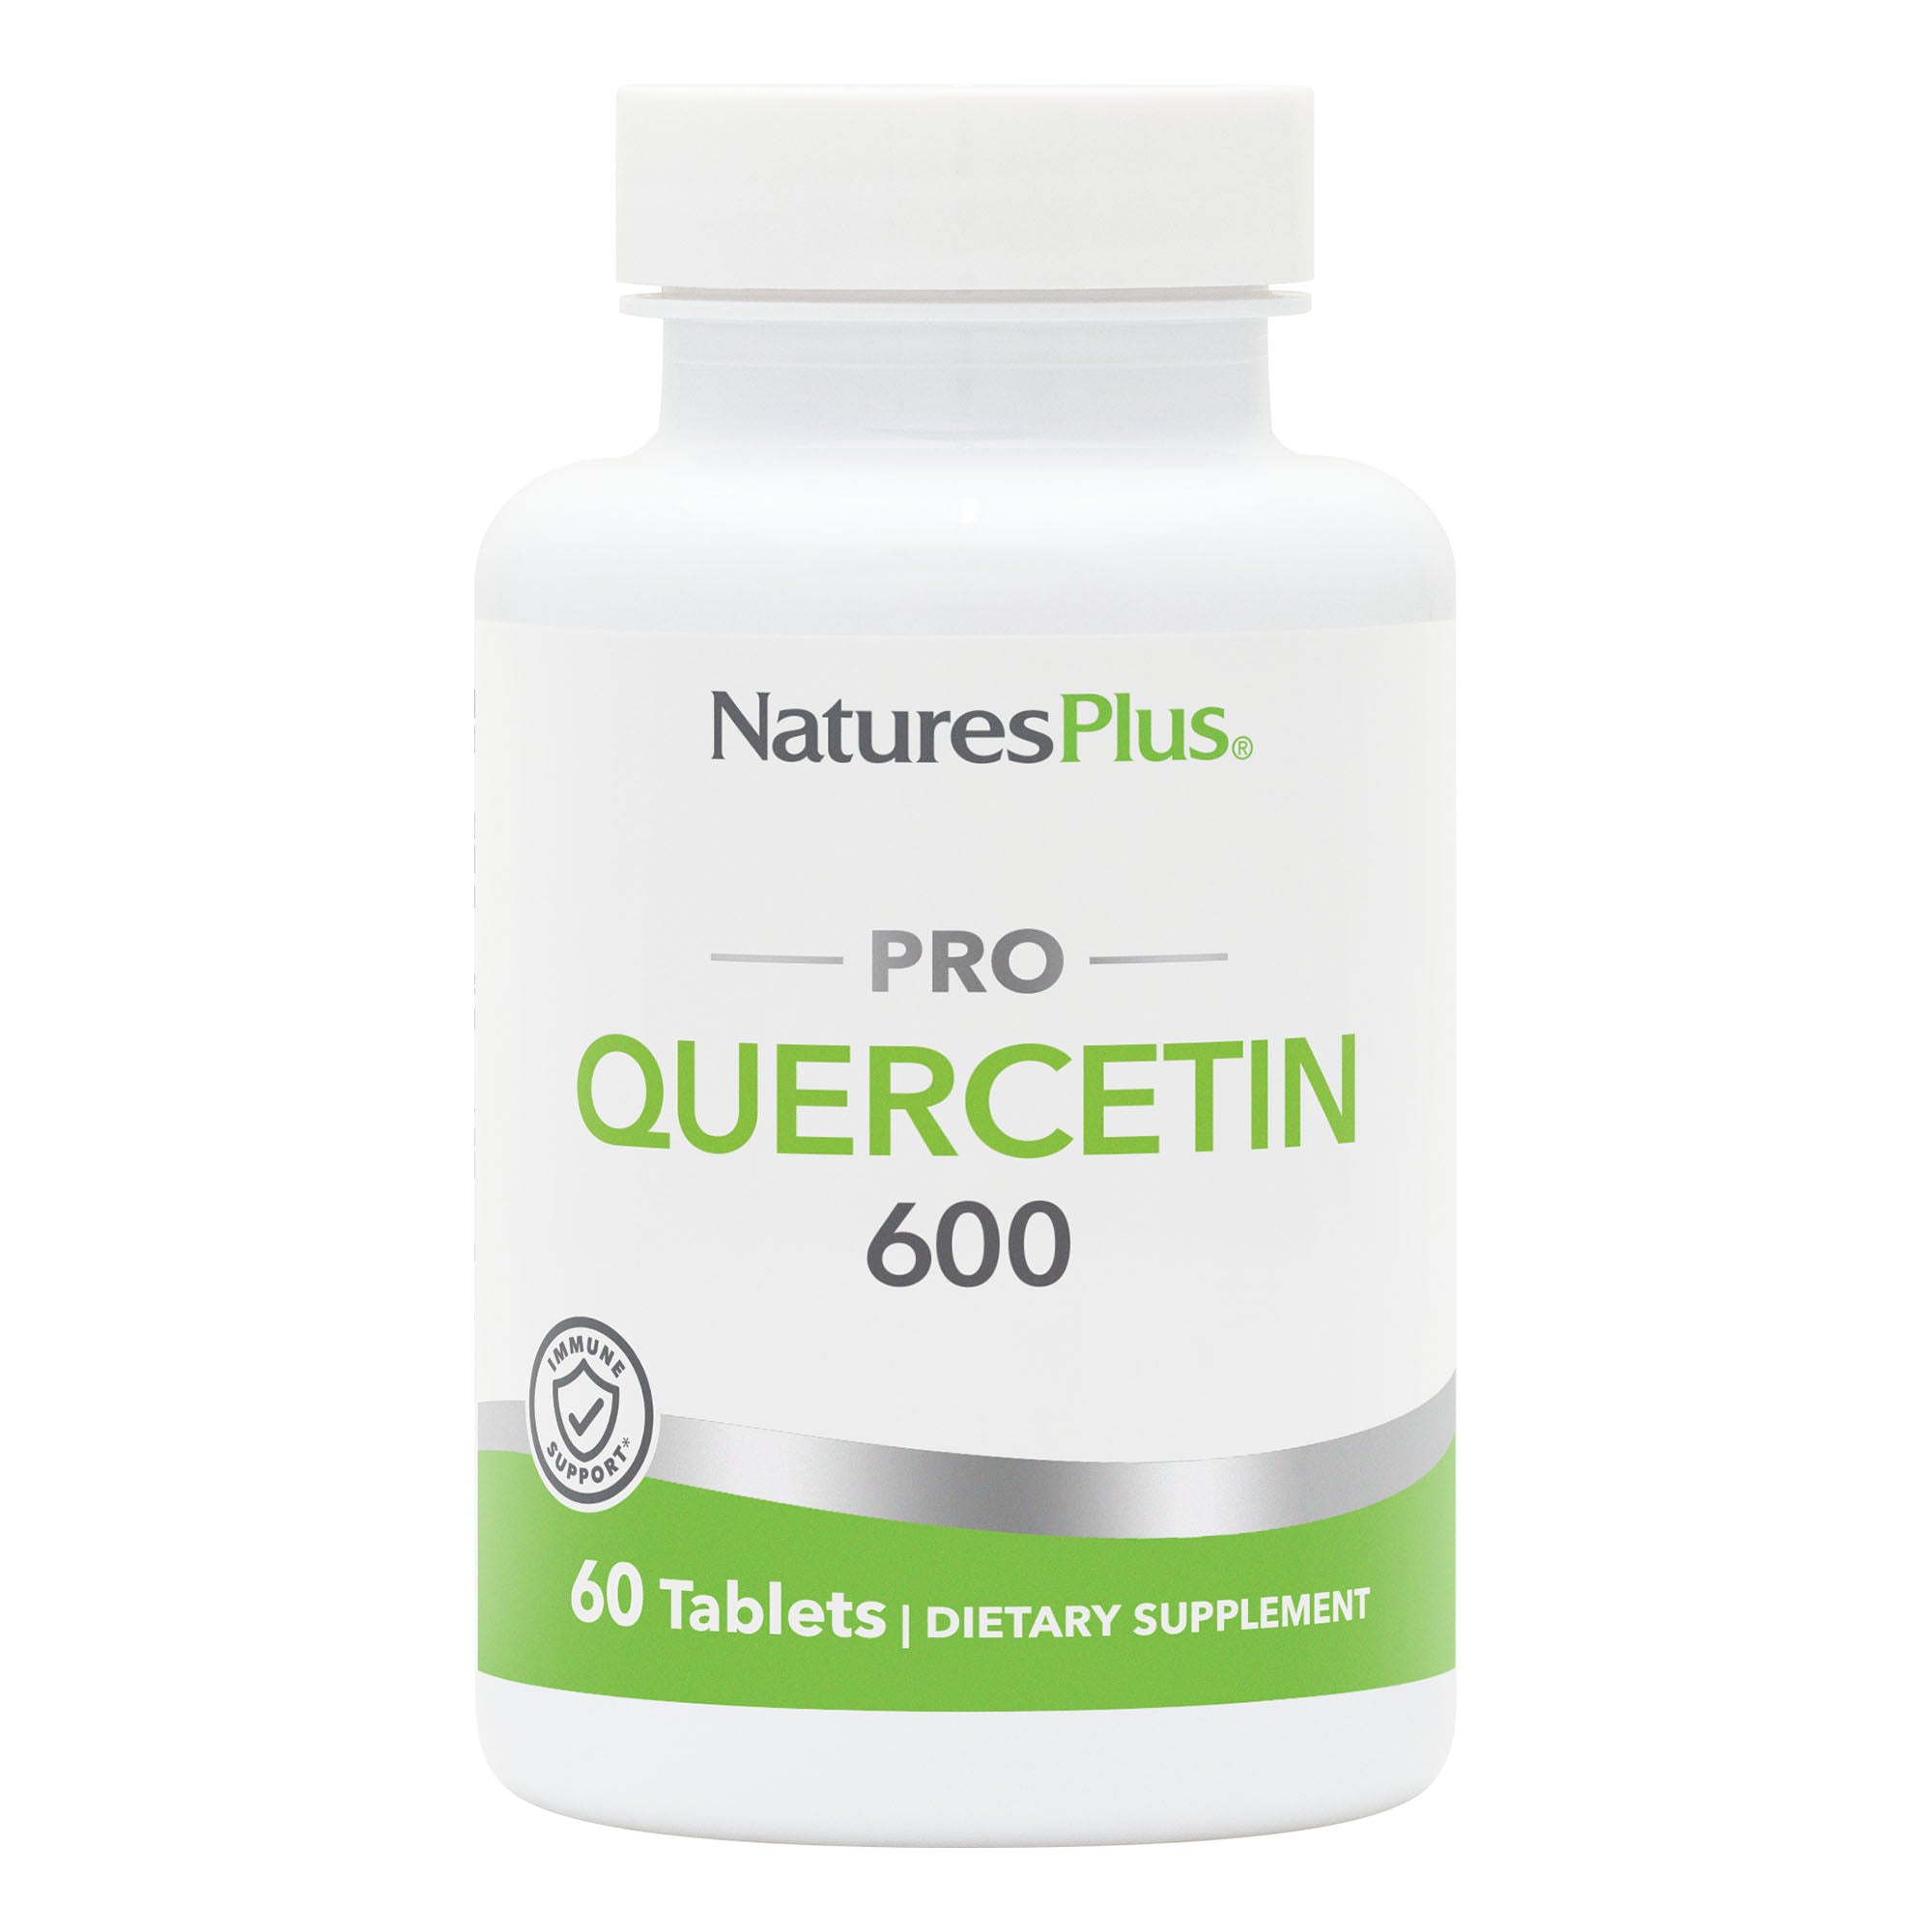 NaturesPlus PRO Quercetin 600 Tablets